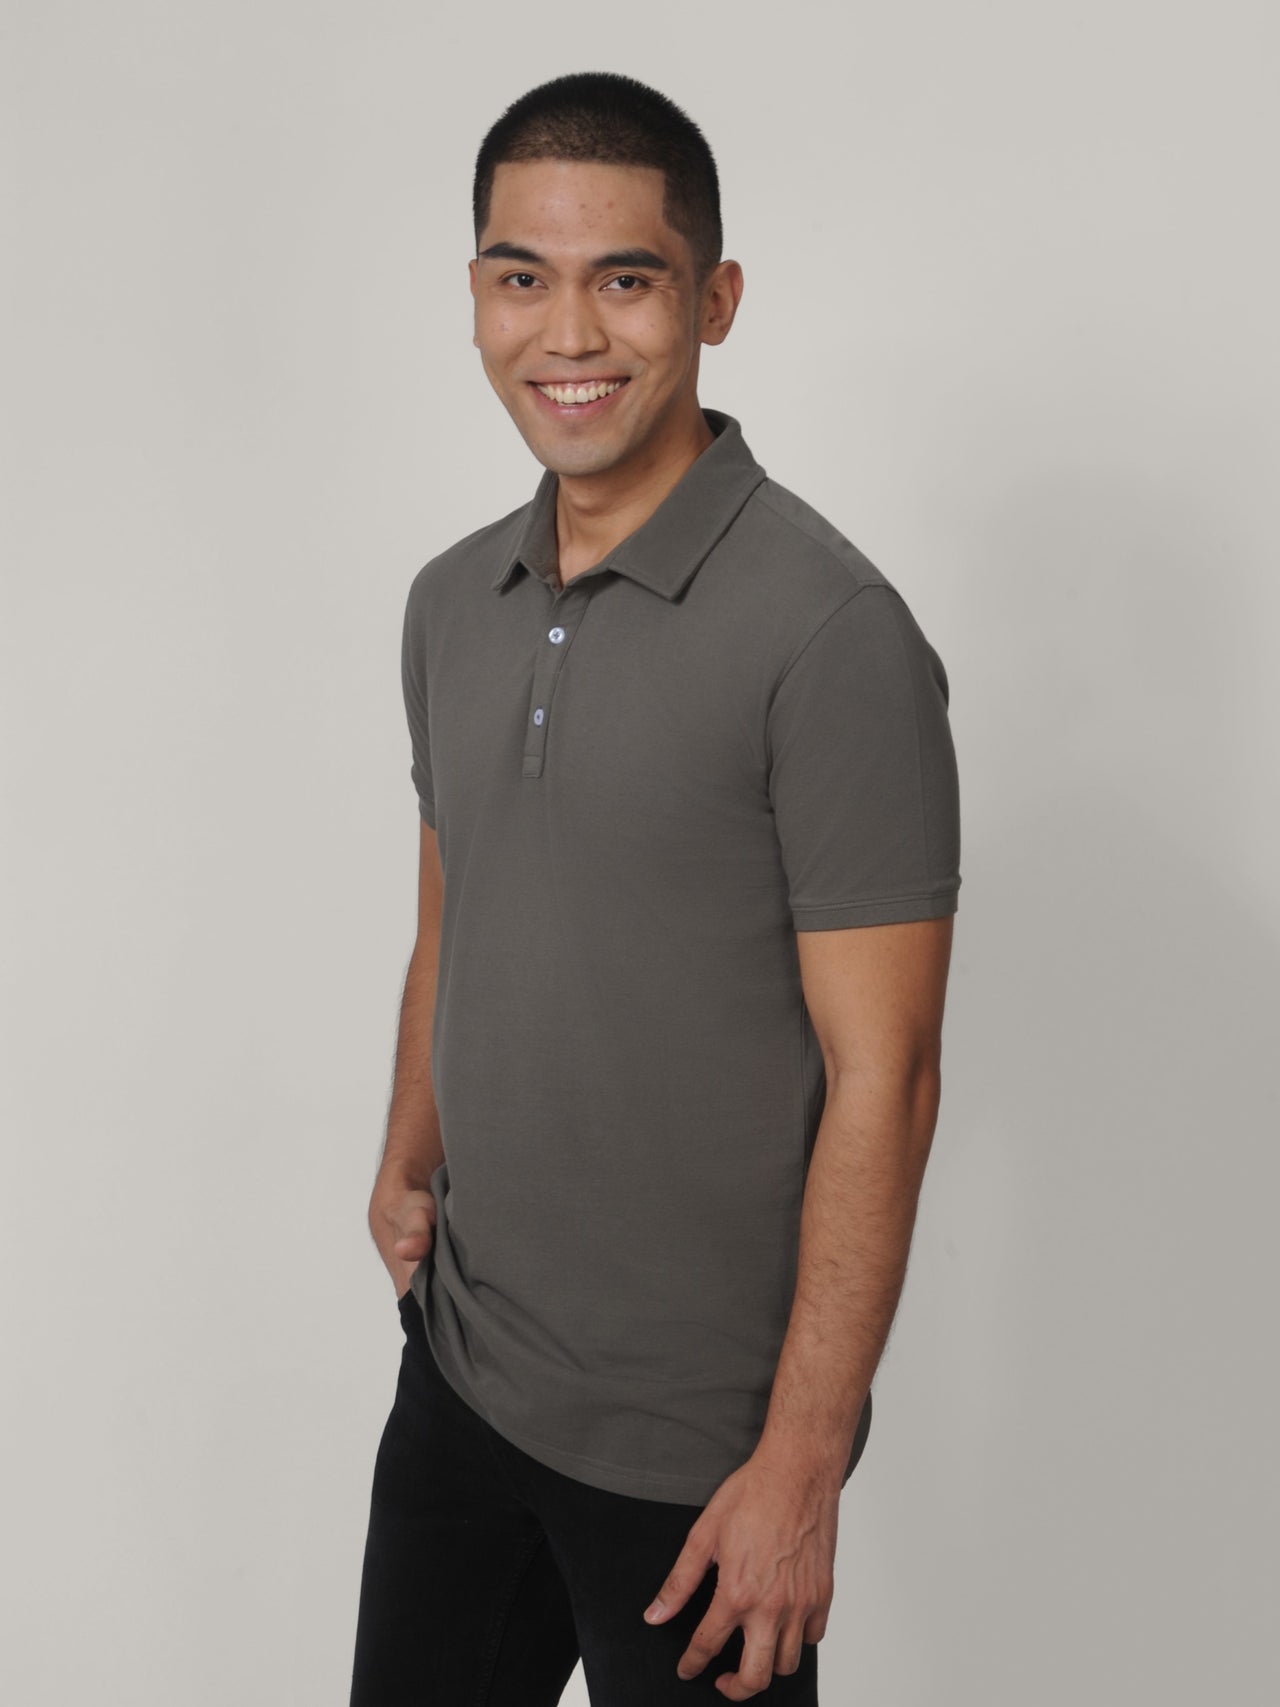 A tall skinny guy wearing a grey medium tall polo shirt.